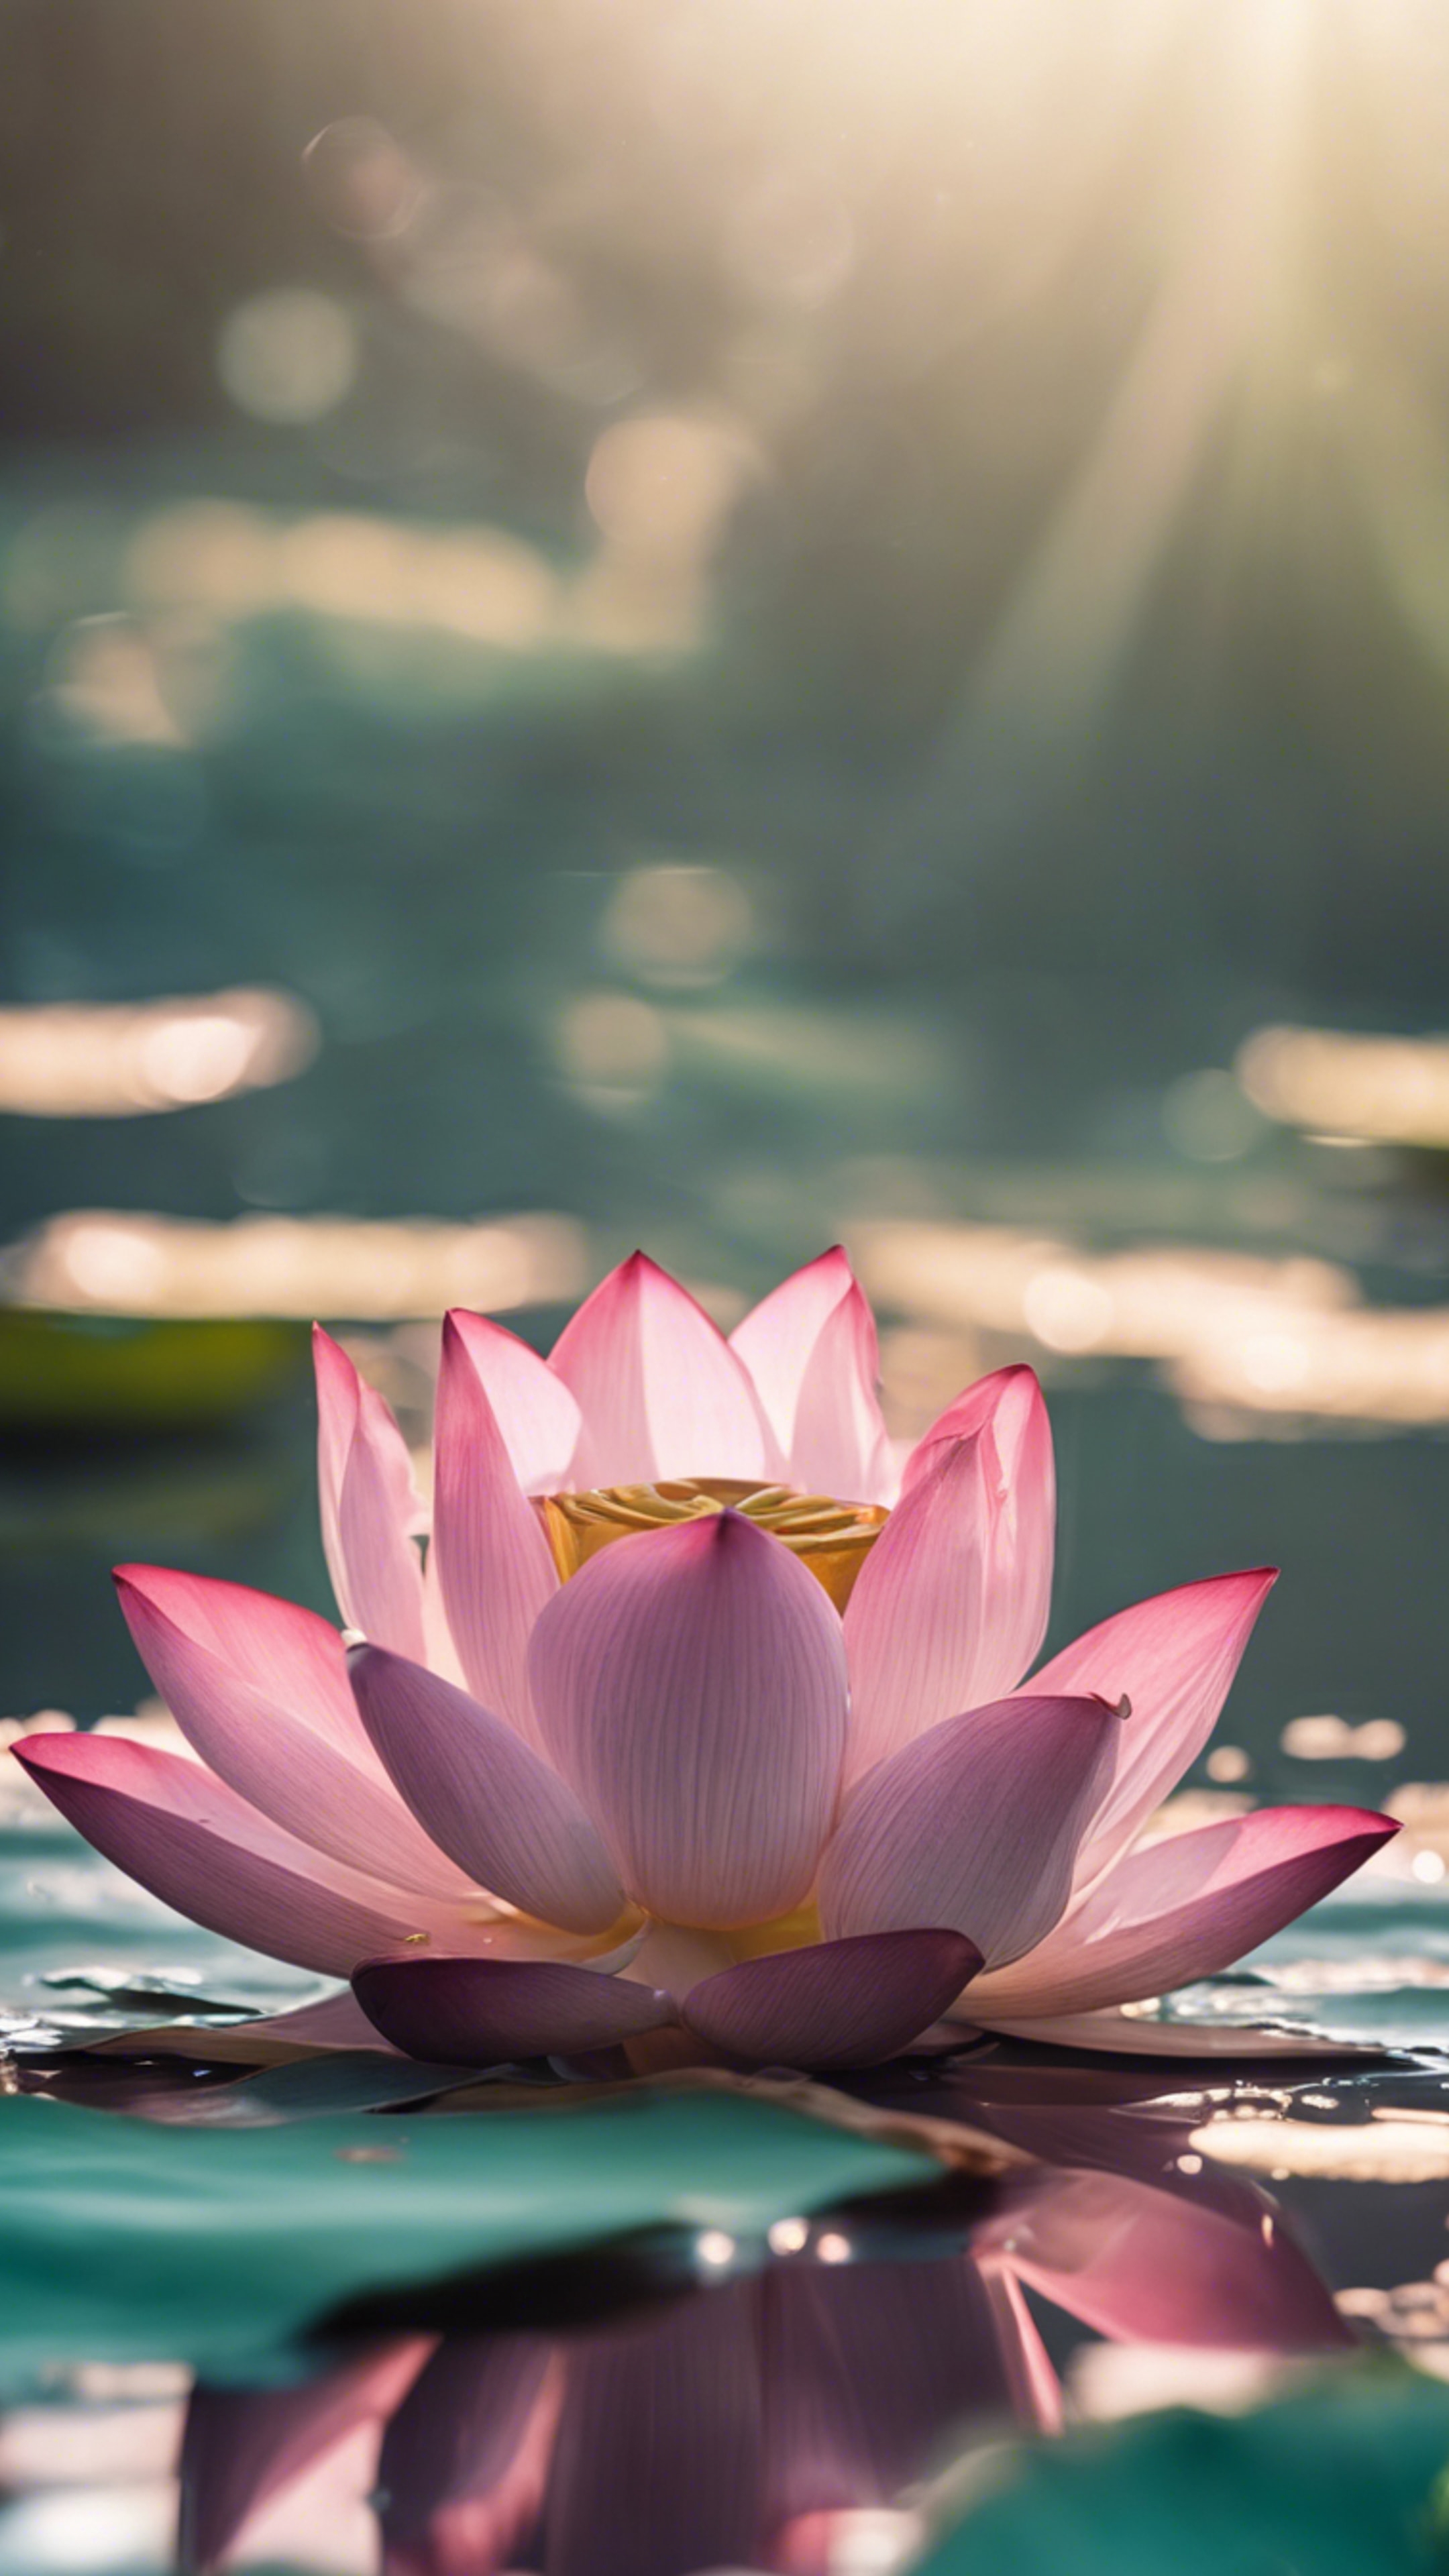 A close-up image of a single blooming lotus on a clear pond. Papel de parede[056d411e4bd14d9f8d69]